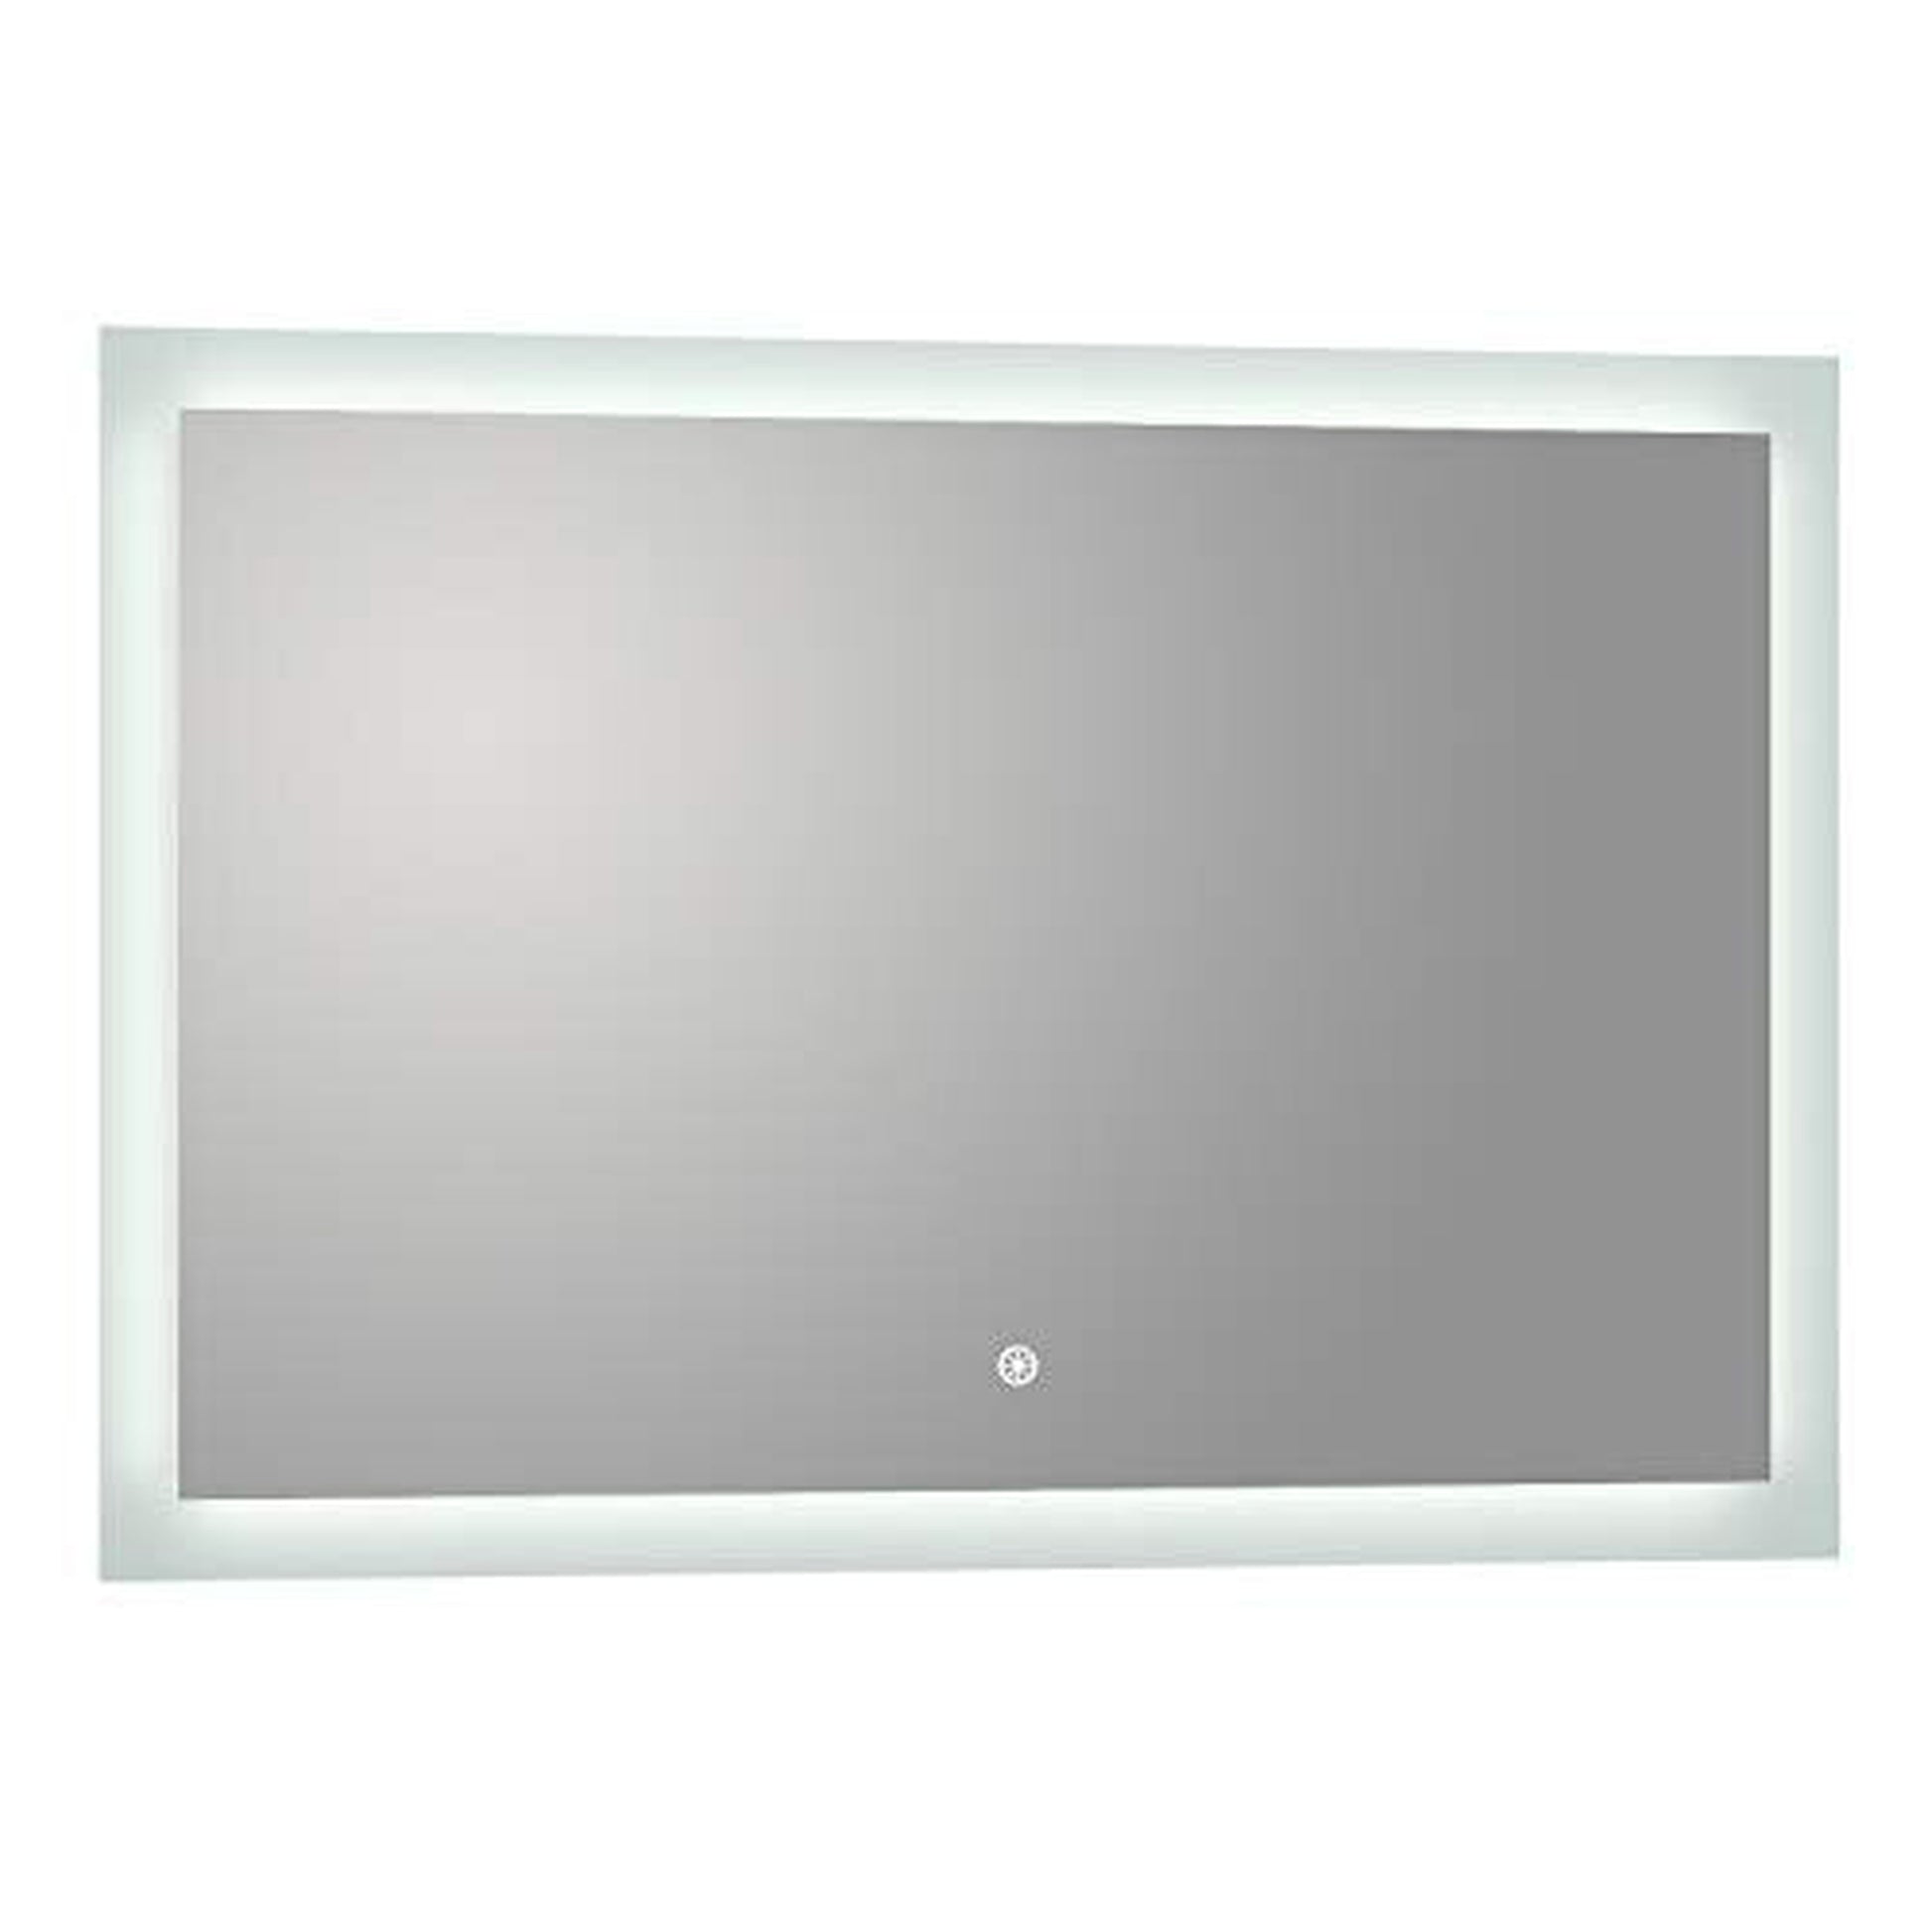 Luxaar Puralite 48" x 30" LED Wall-Mounted Backlit Vanity Mirror With Memory Dimmer